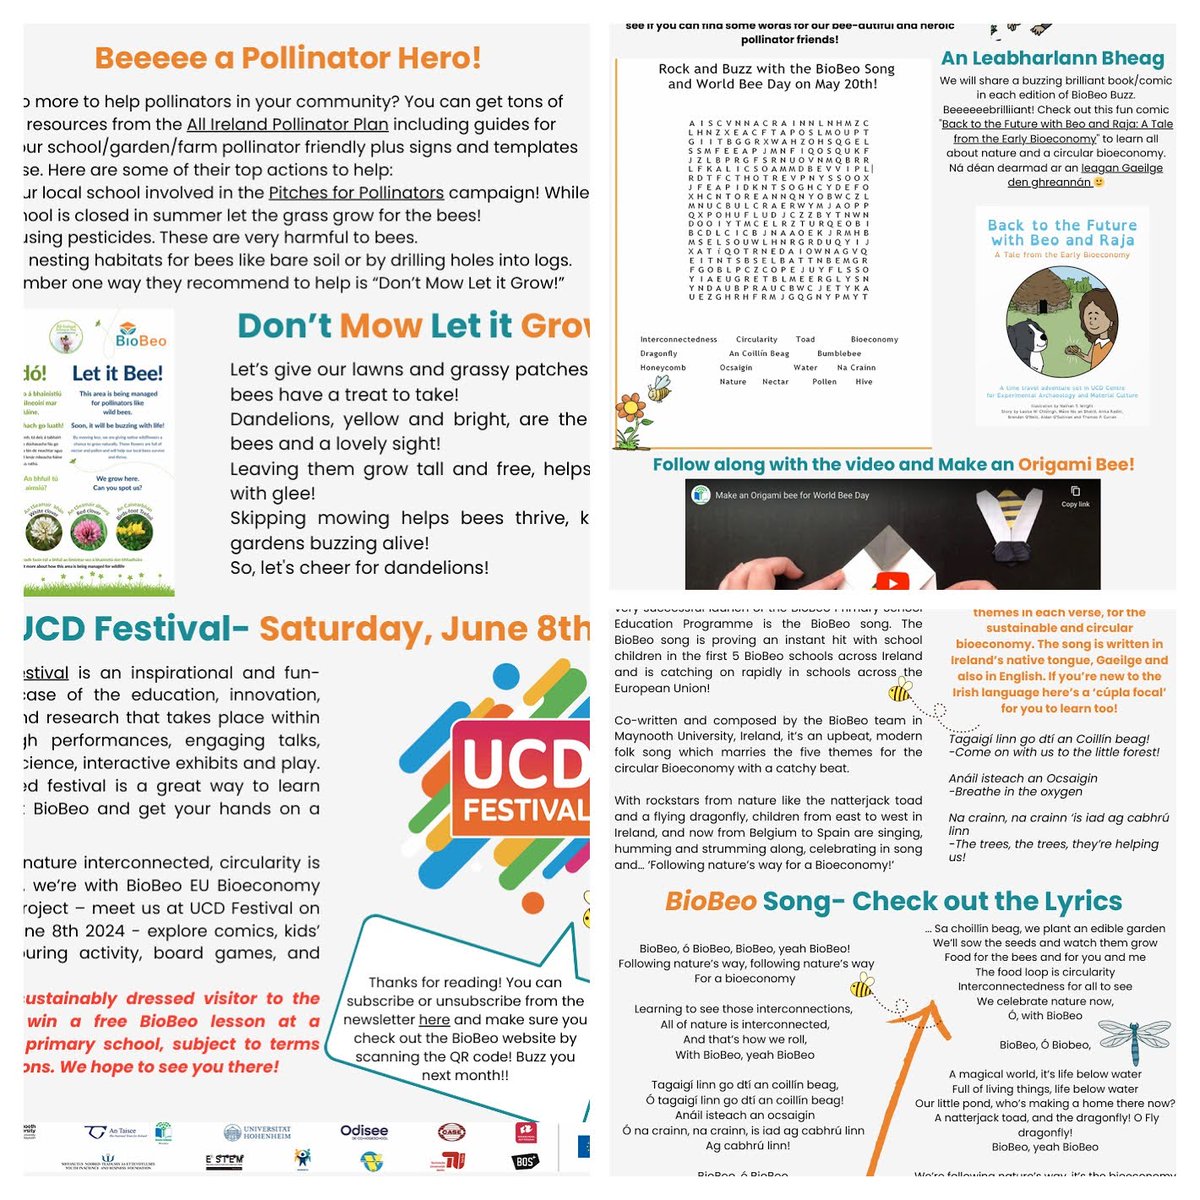 Crafts, quizzes, jokes, #UCDFestival preview @FestivalUCD - all in #BioBeoBuzz newsletter on #WorldBeeDay today. Subscribe at biobeo.eu/biobeo-buzz-ne…